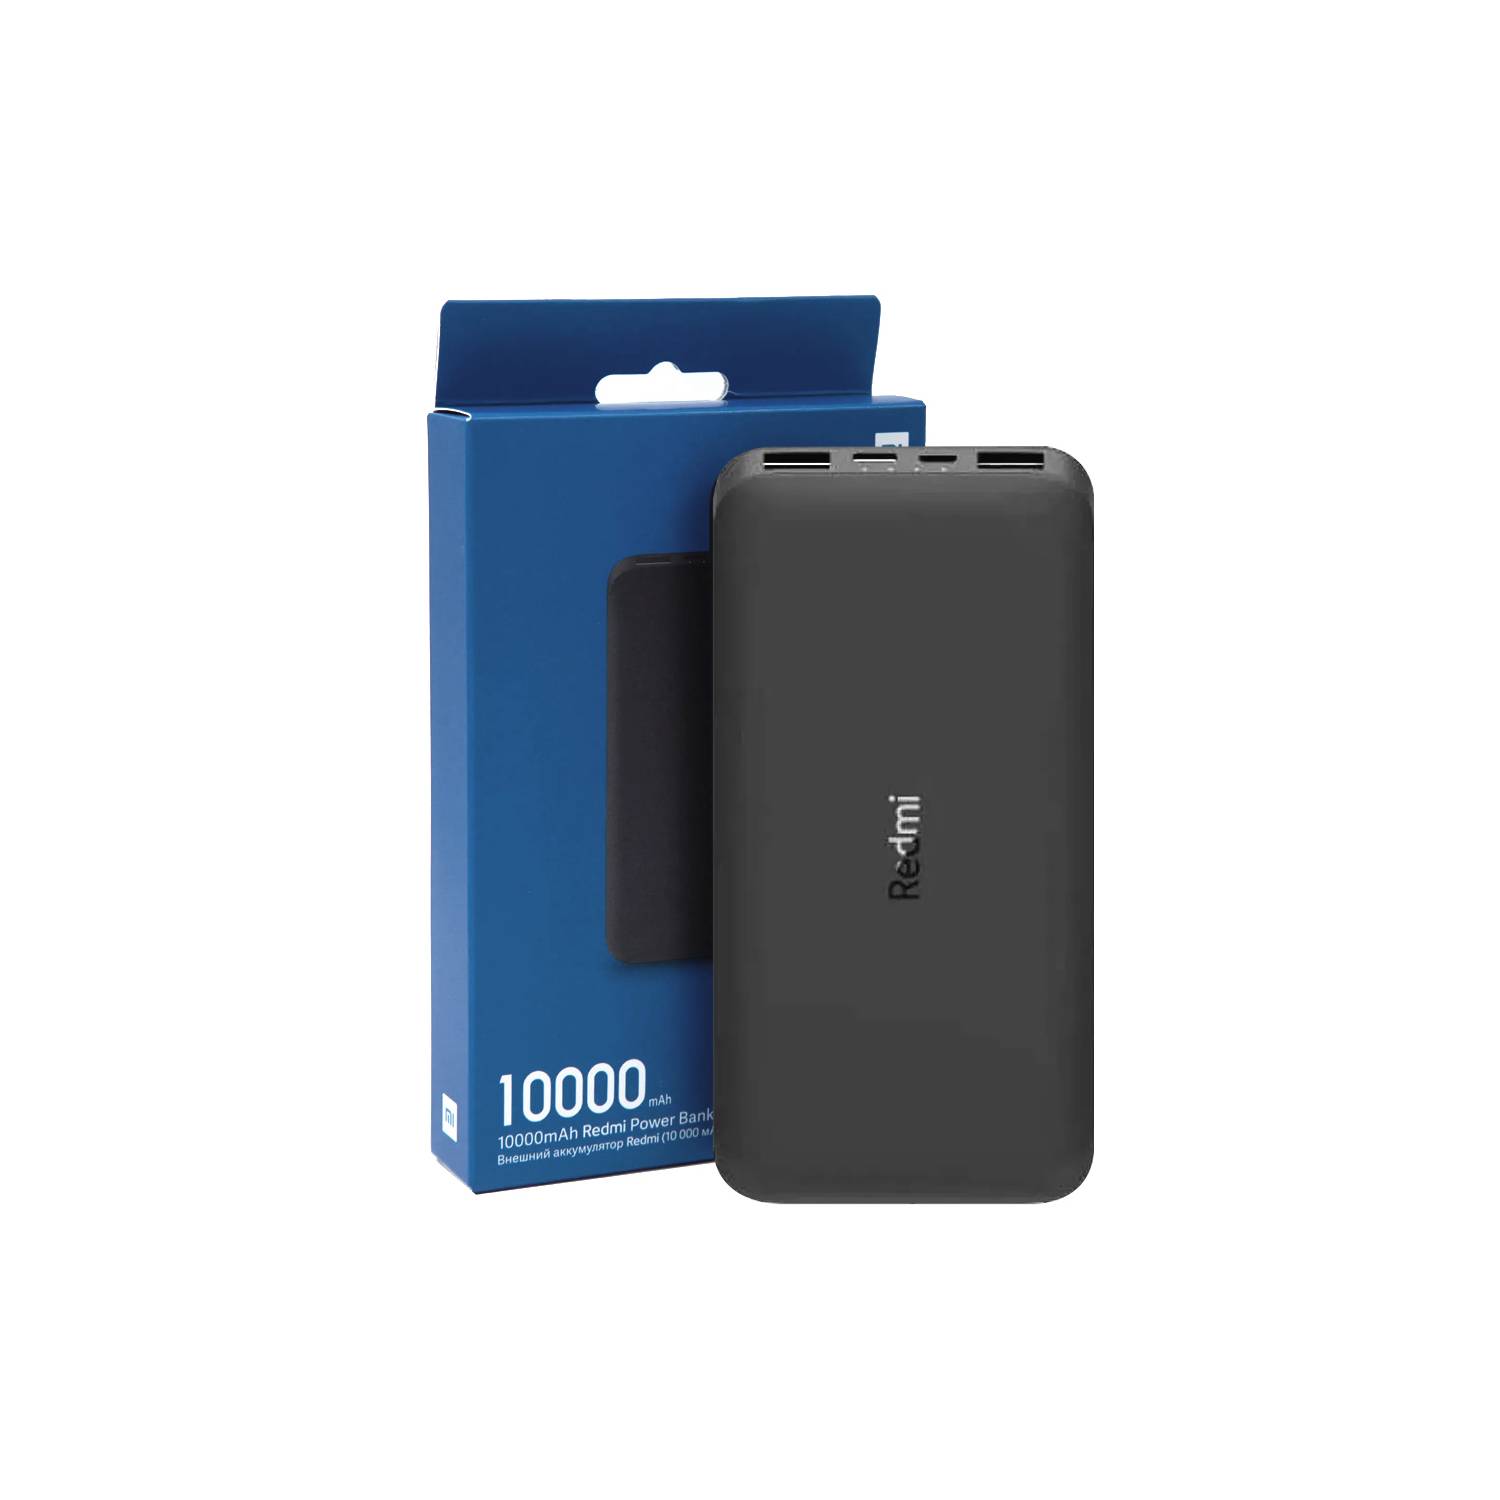 Bateria Externa Xiaomi 10000mah Redmi Power Bank Negro